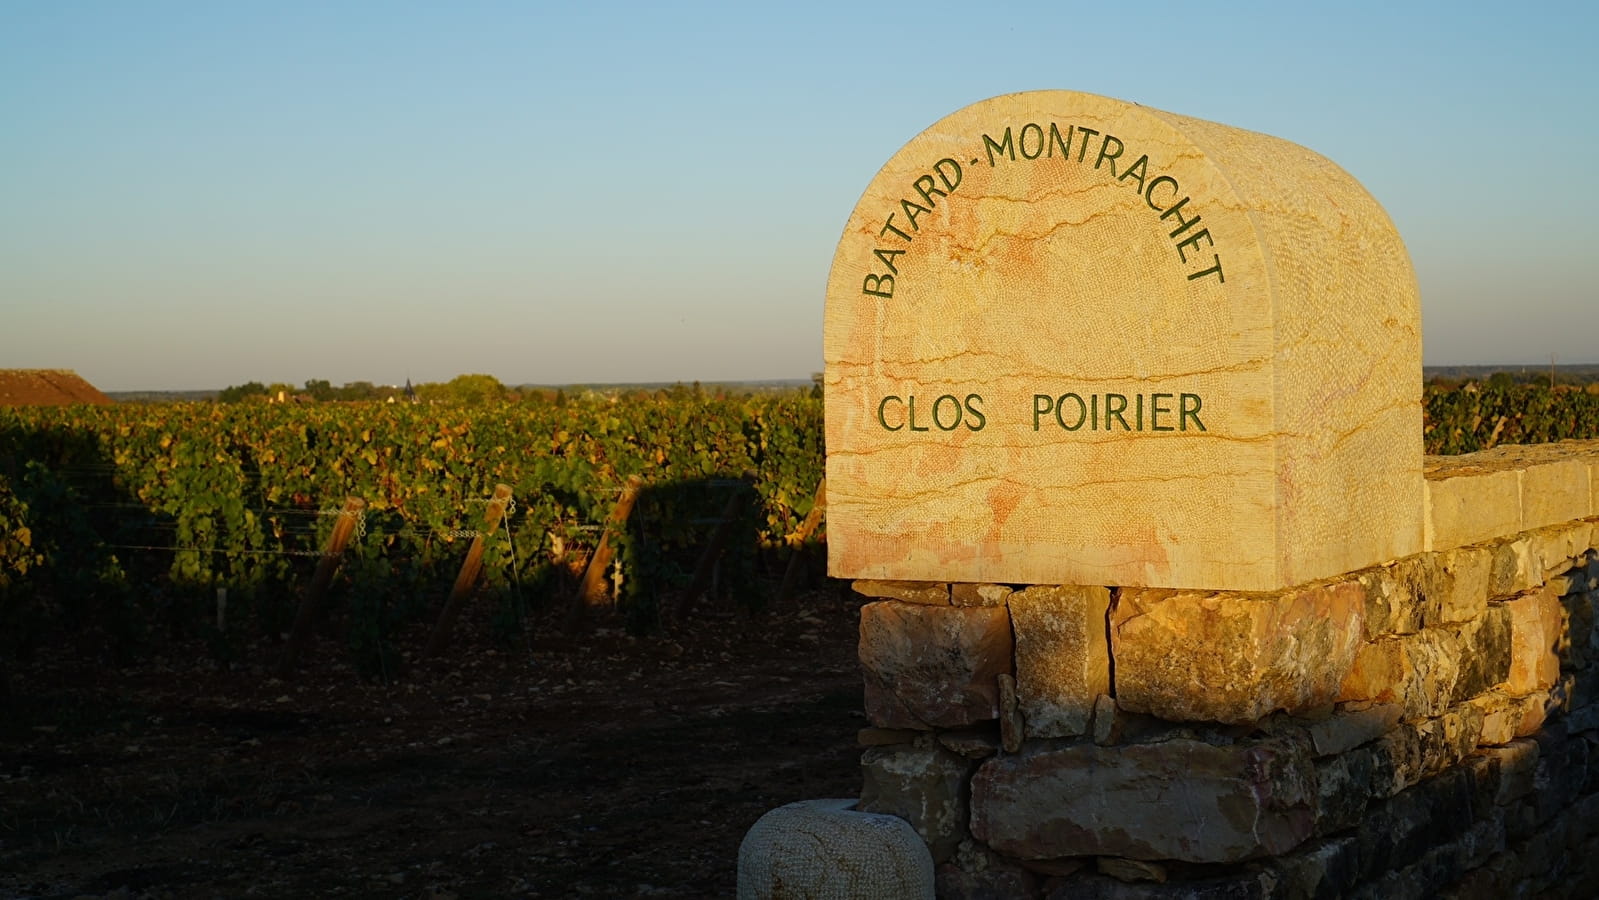 Le Clos Poirier: geohistory of a vineyard in the heart of Bâtard-Montrachet